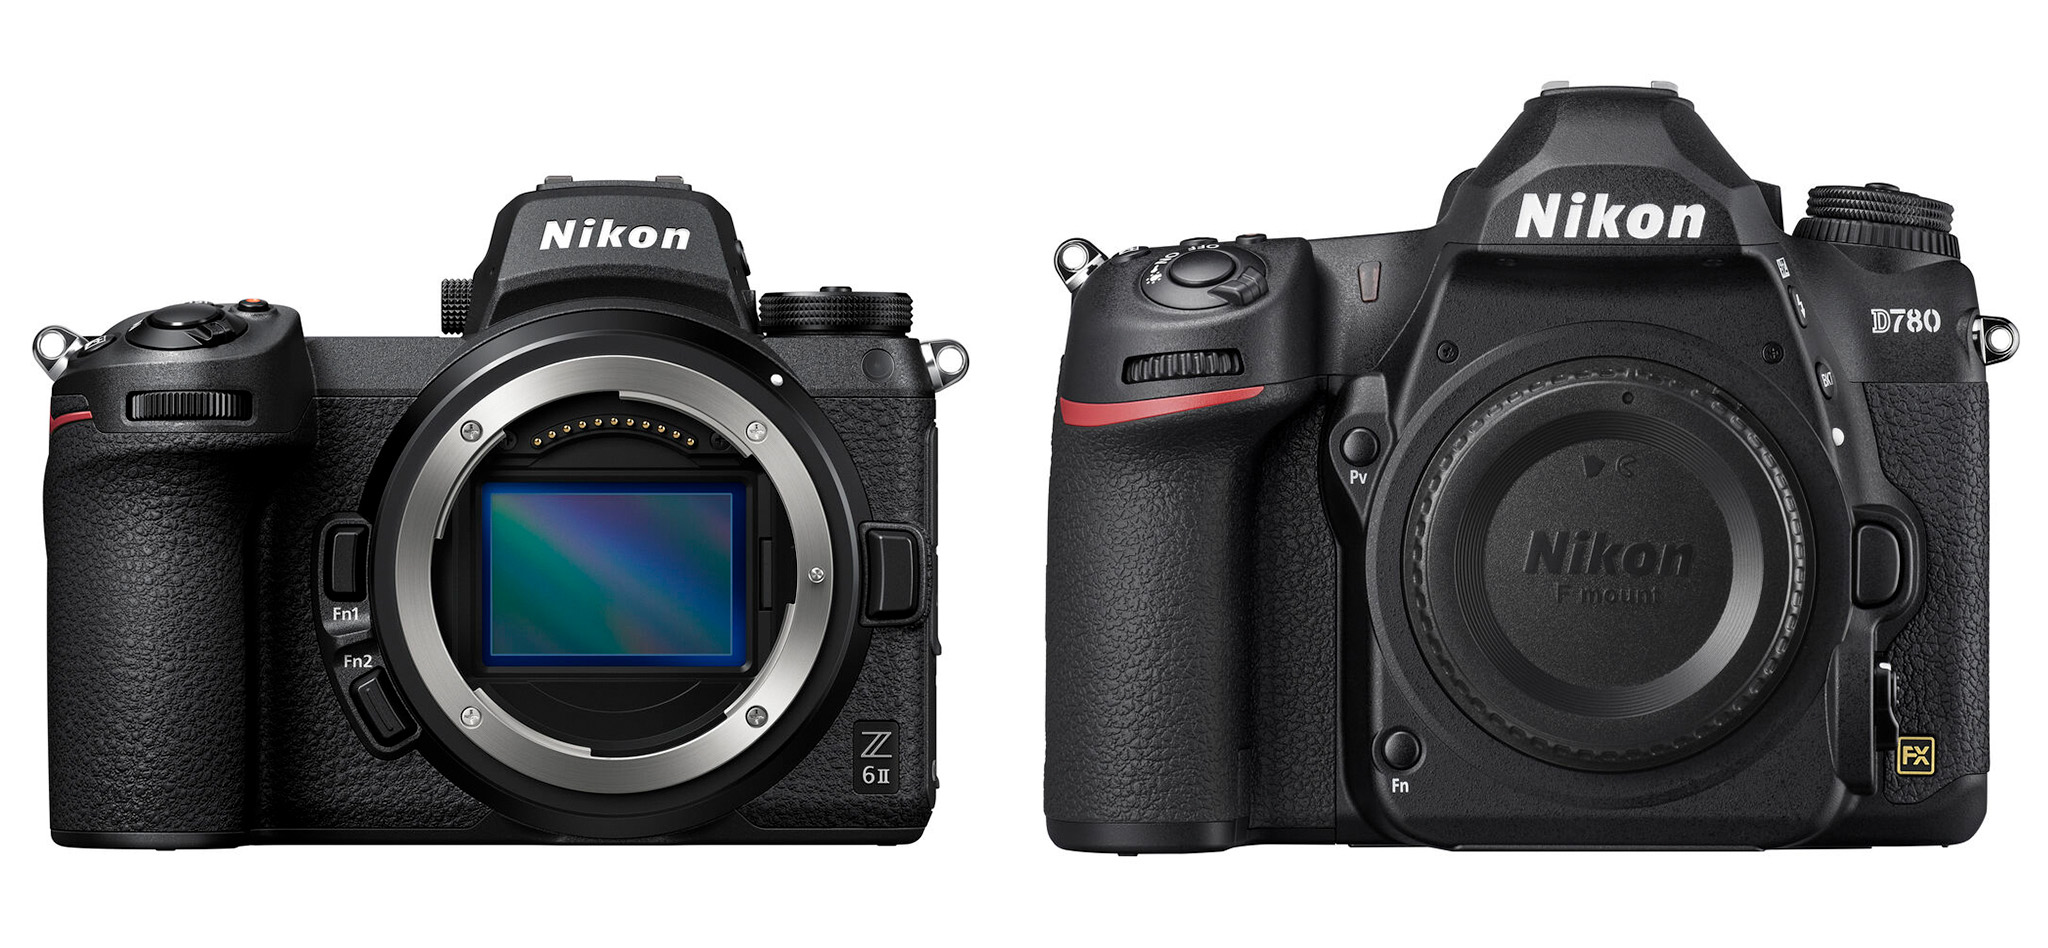 https://photographylife.com/wp-content/uploads/2021/05/Nikon-Z6-II-vs-Nikon-D780.jpg